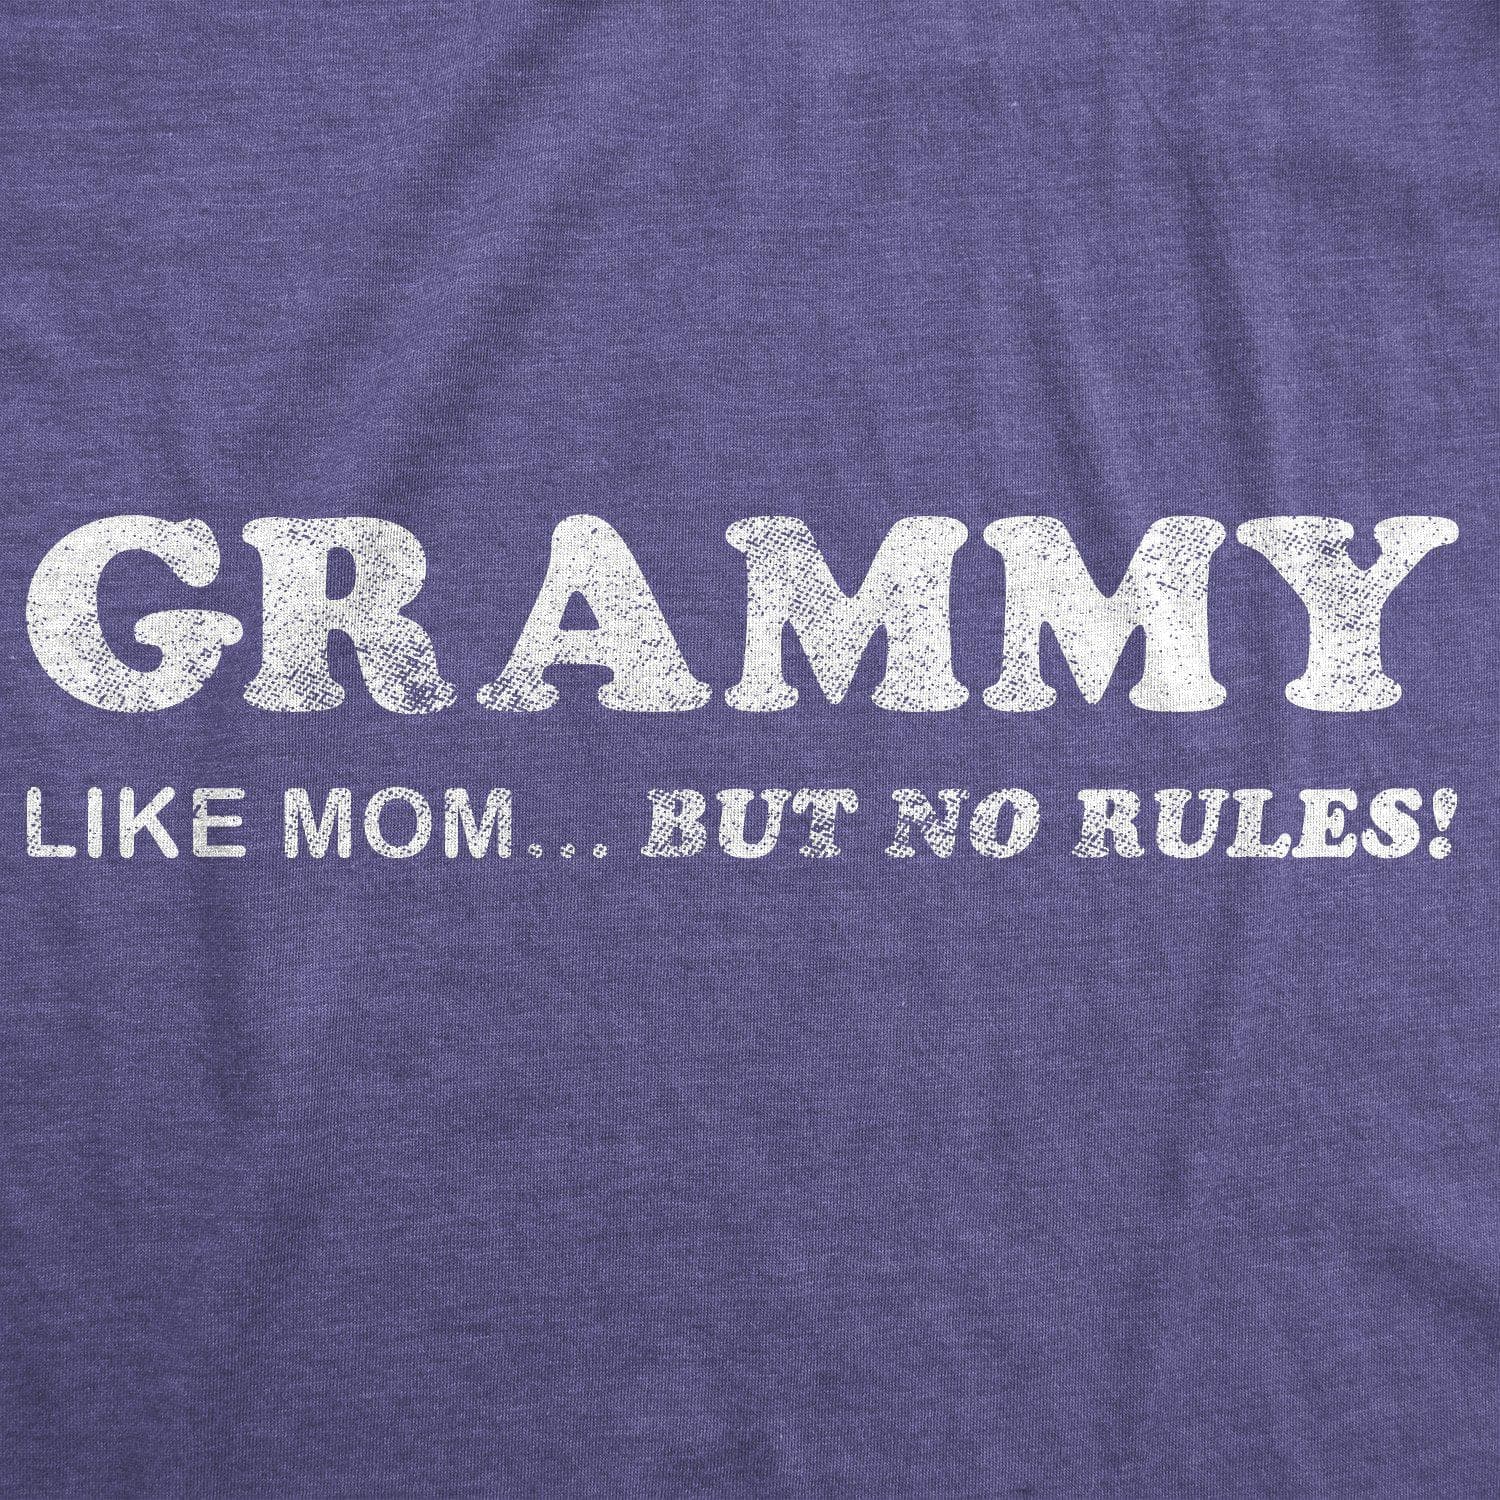 Grammy… Like Mom But No Rules Women's Tshirt  -  Crazy Dog T-Shirts